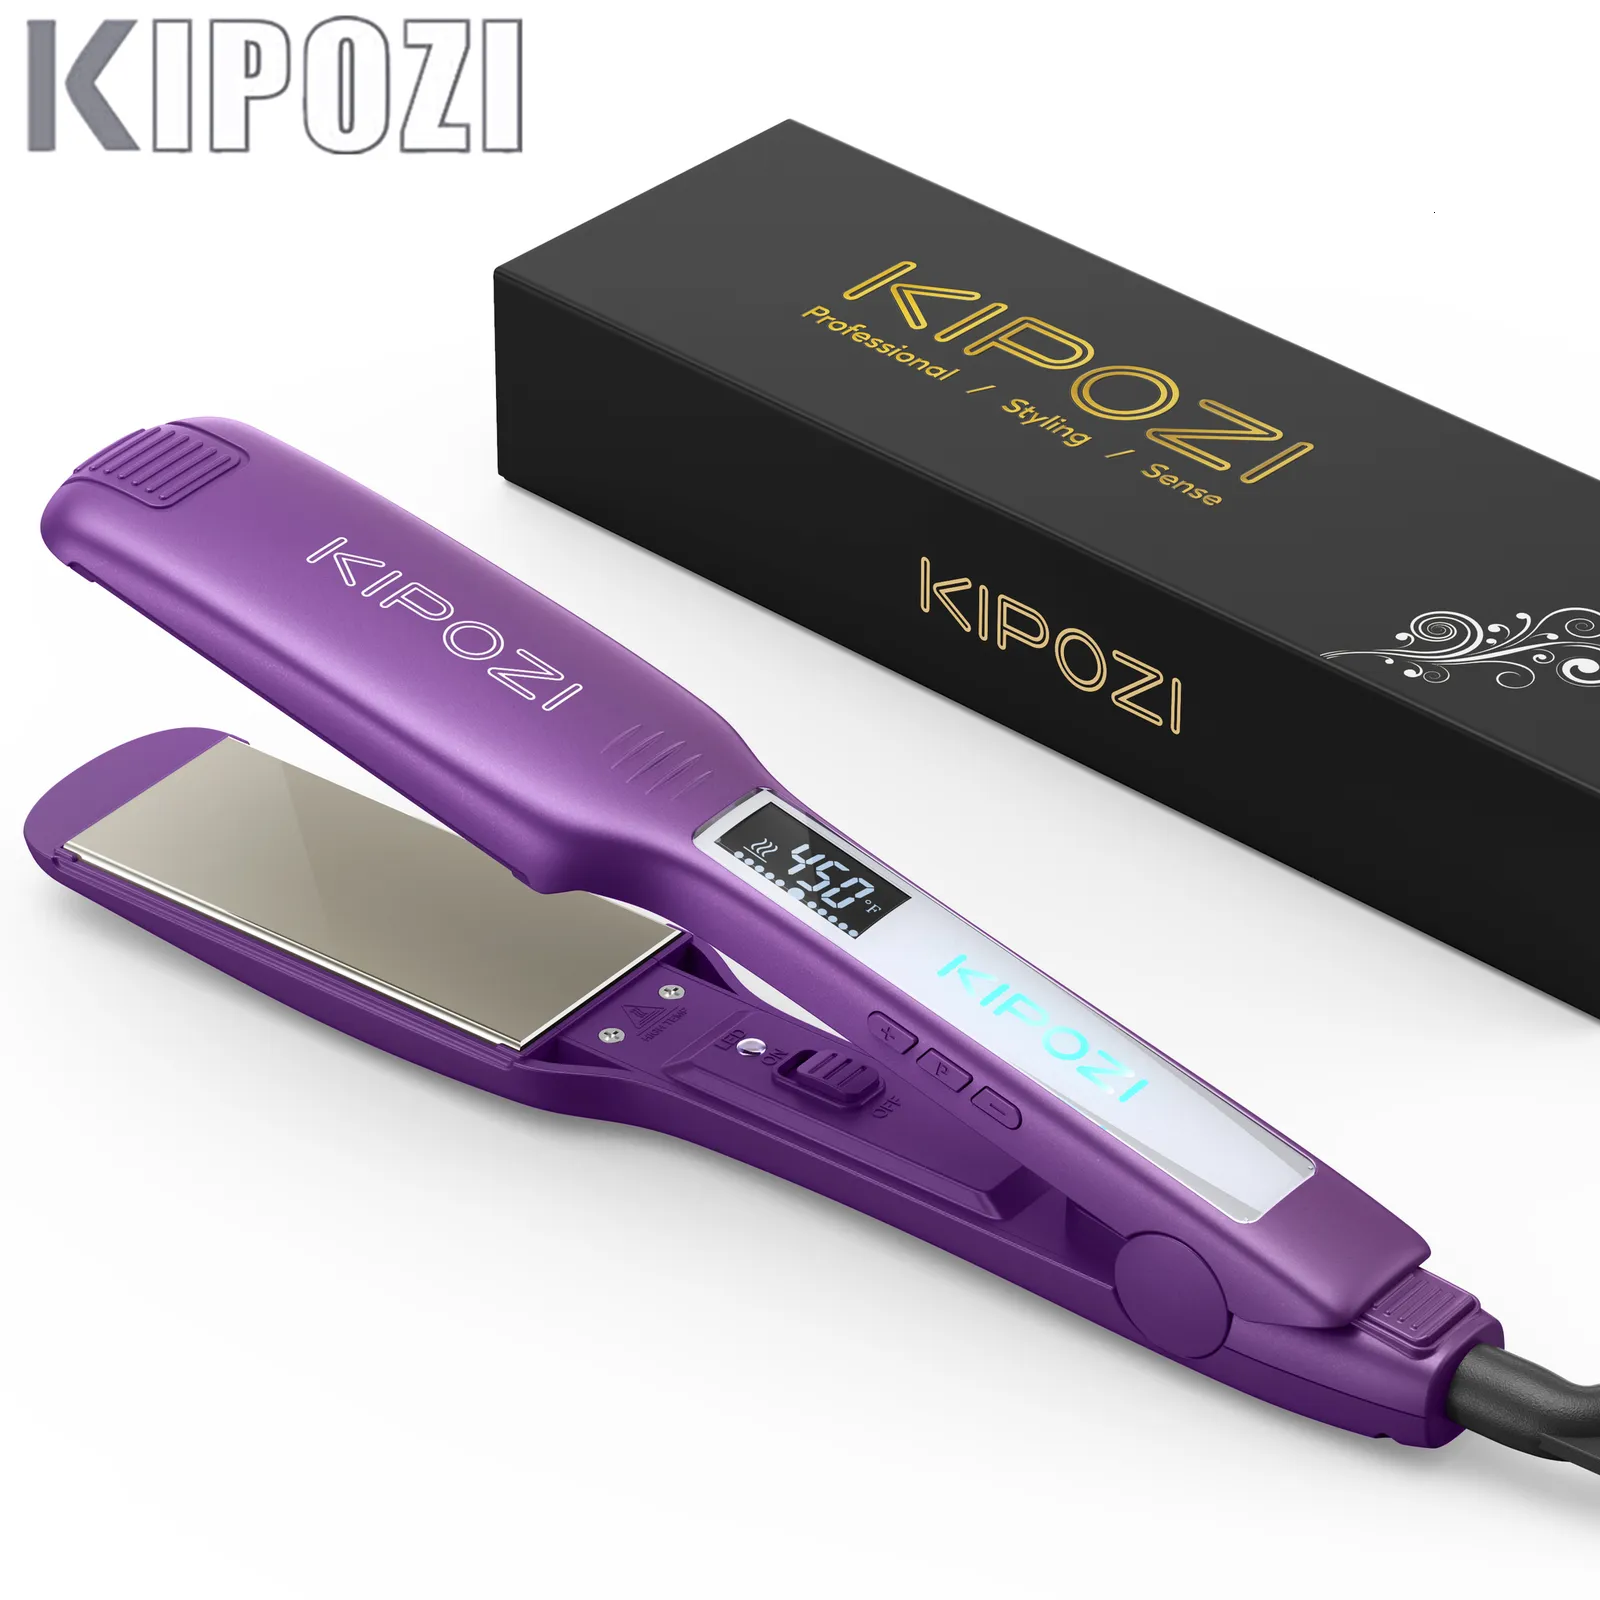 Alisadores de cabelo Kipozi Profissional Hair Alisadores Ferro plano com Digital LCD Display Dune Tonstage Instant Aquecimento Curling Iron Presente 230412